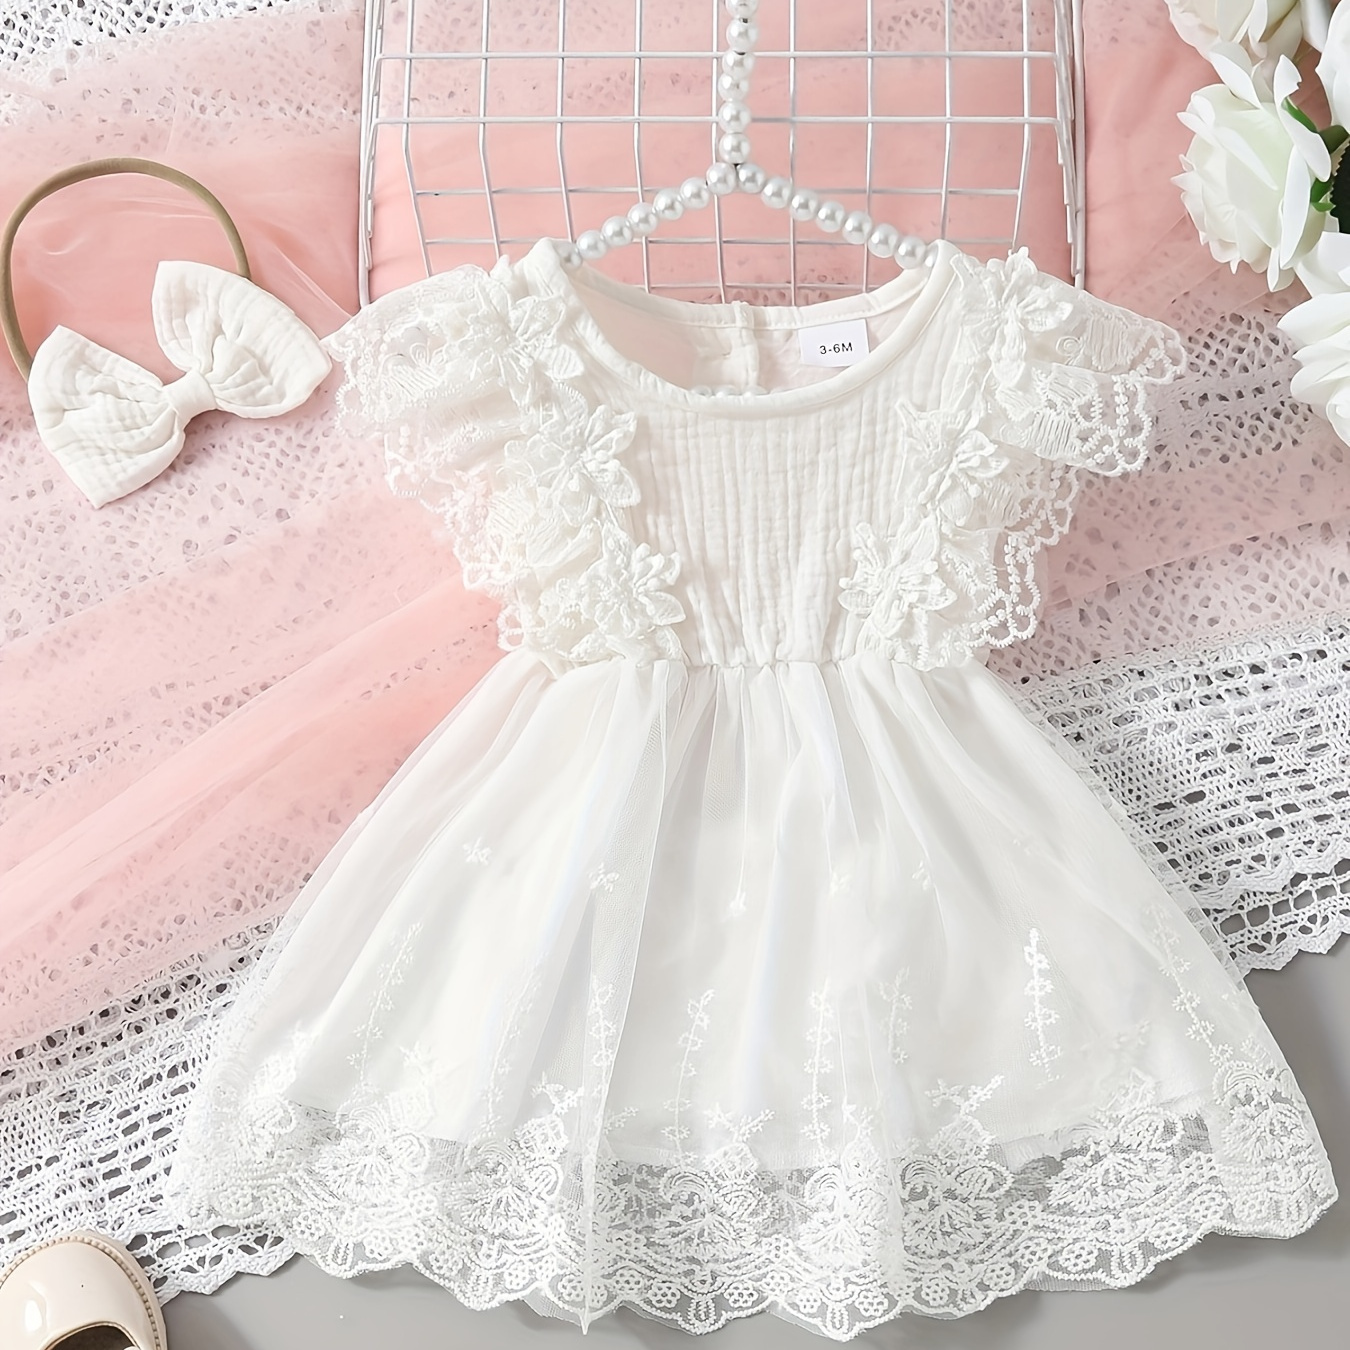 

Baby's Elegant Flower Embroidered Lace Cap Sleeve Dress, Infant & Toddler Girl's Clothing For Summer Christening & Baptism, As Gift